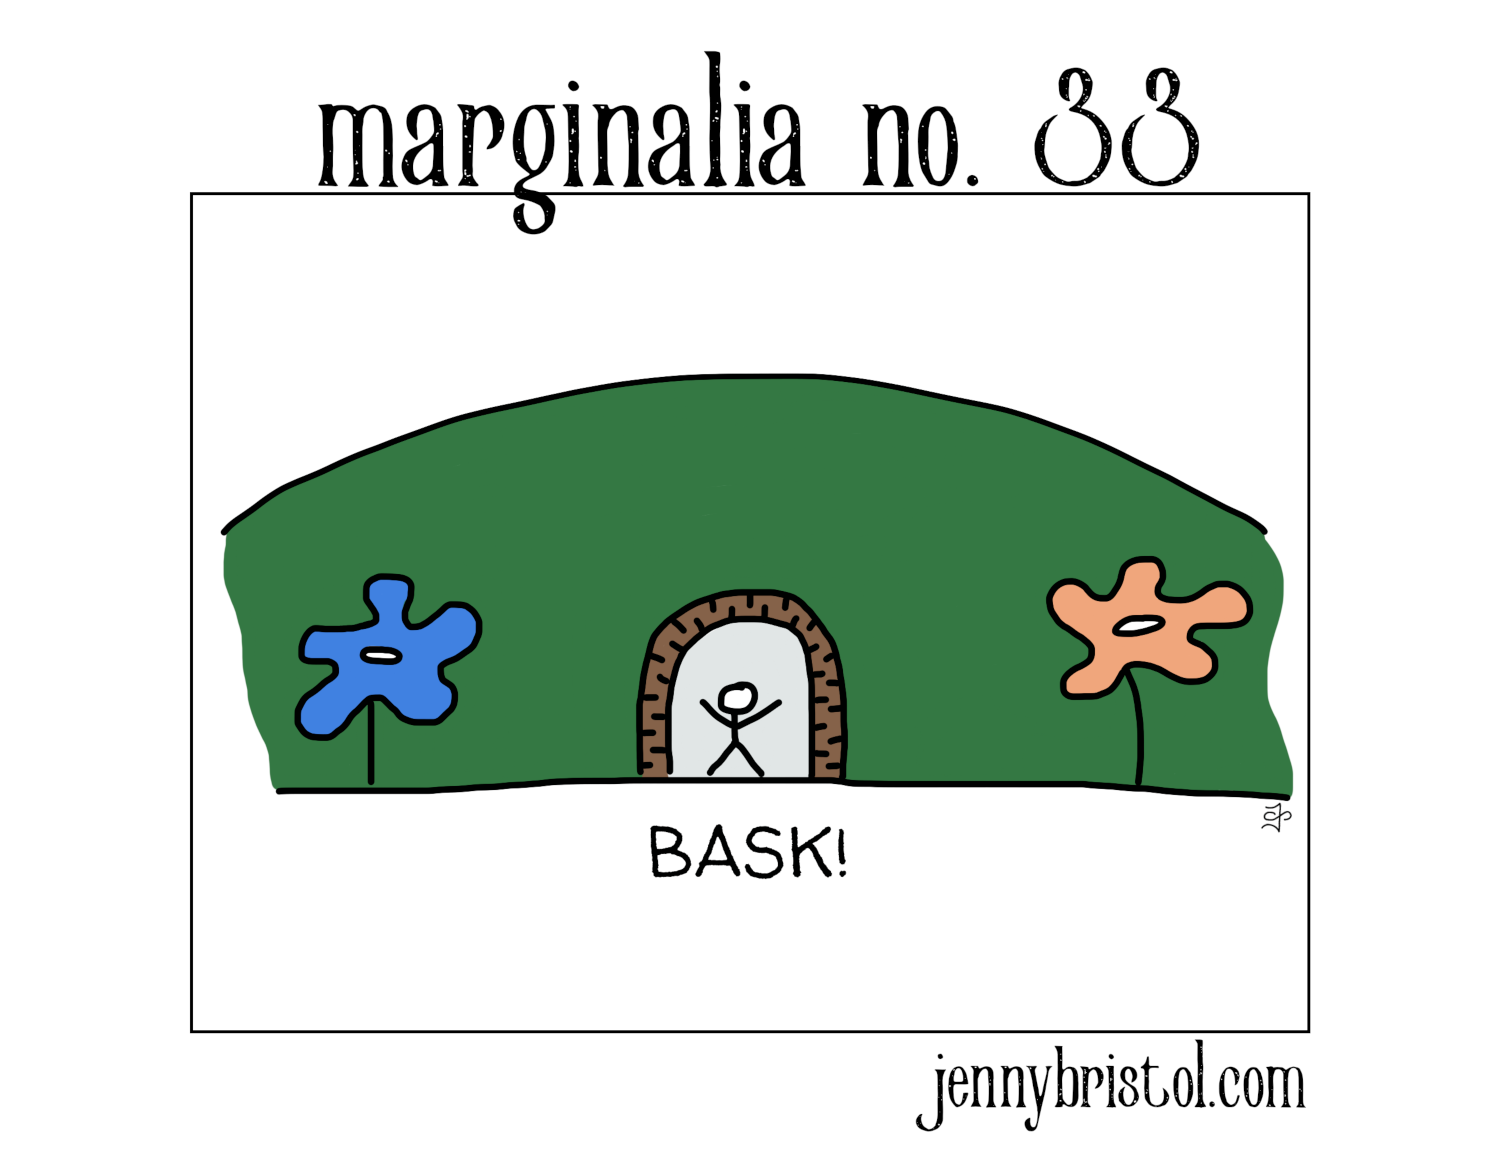 Marginalia no. 33 to post